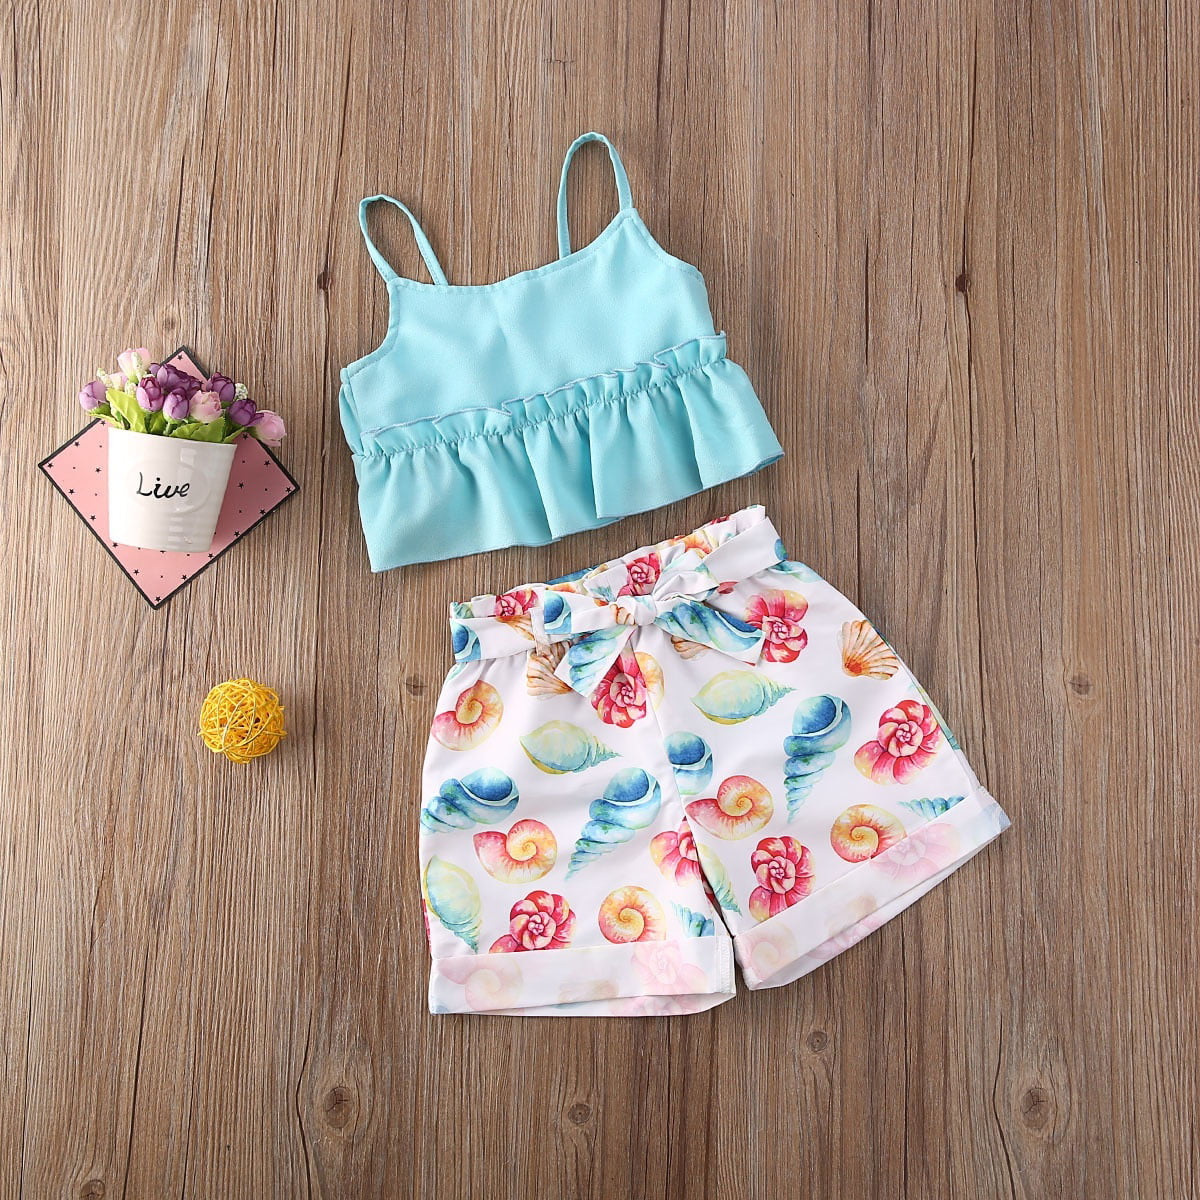 Fabal Toddler Baby Girls Short Sleeve Floral Print Tops+Shorts+Headbands Set Outfit